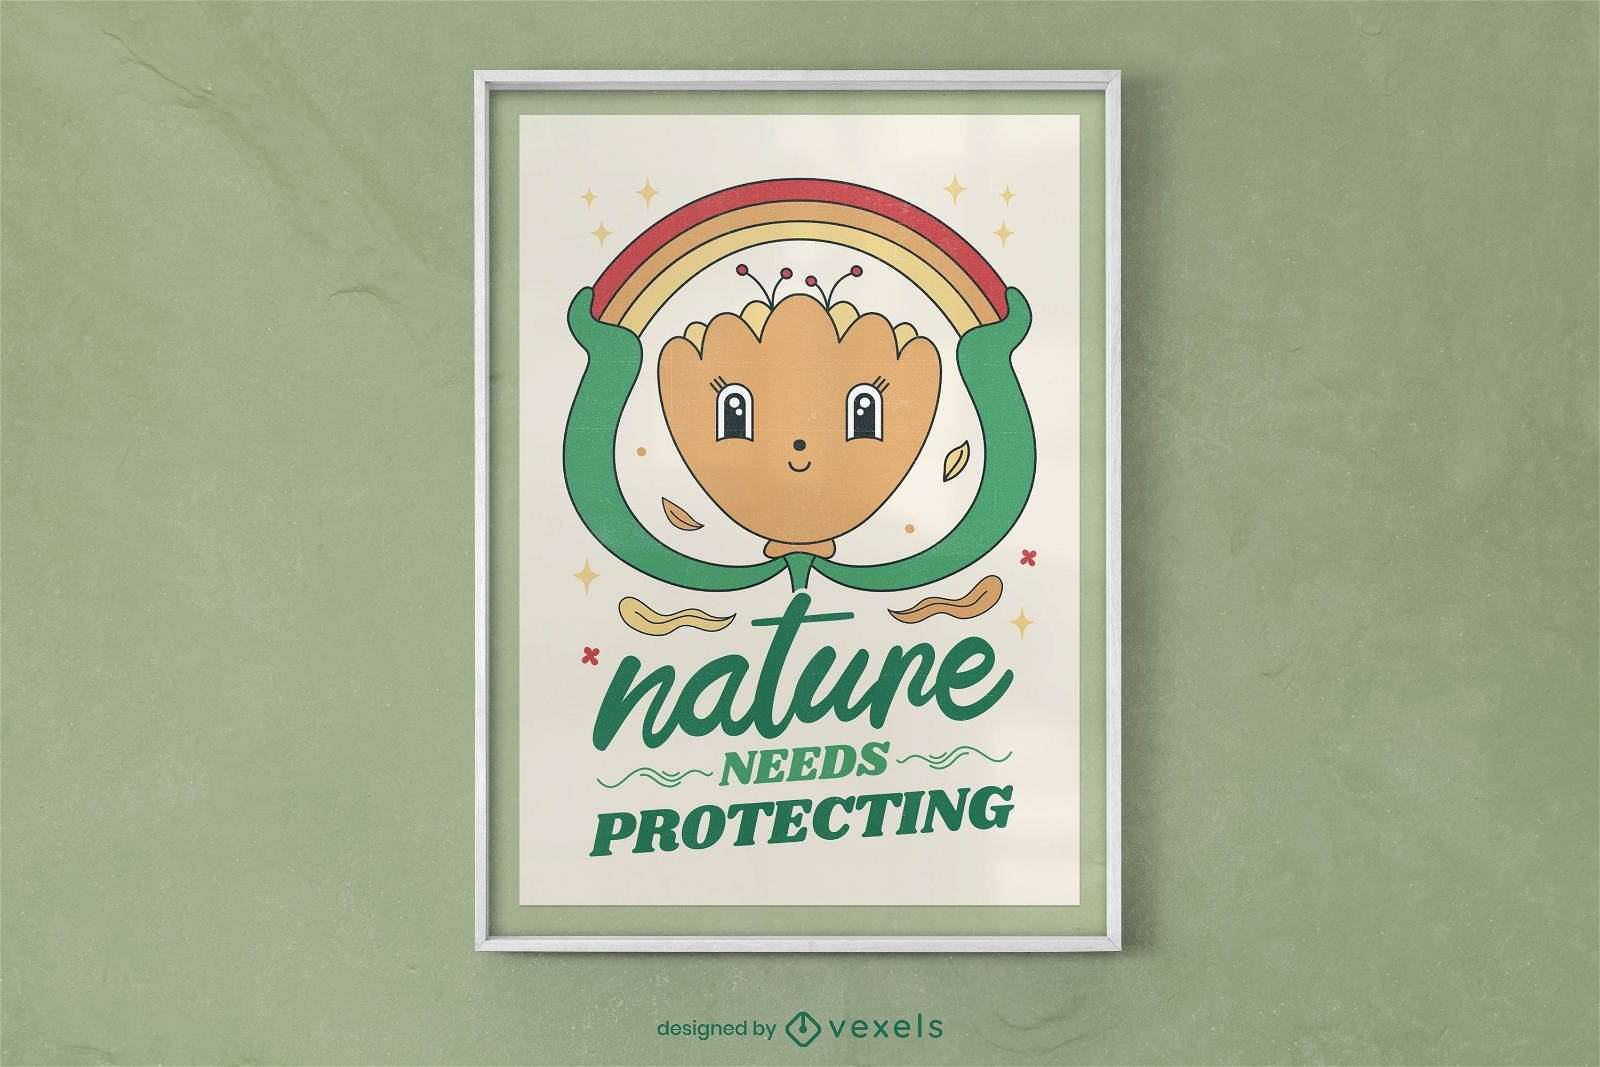 La naturaleza necesita proteger el dise?o del cartel.